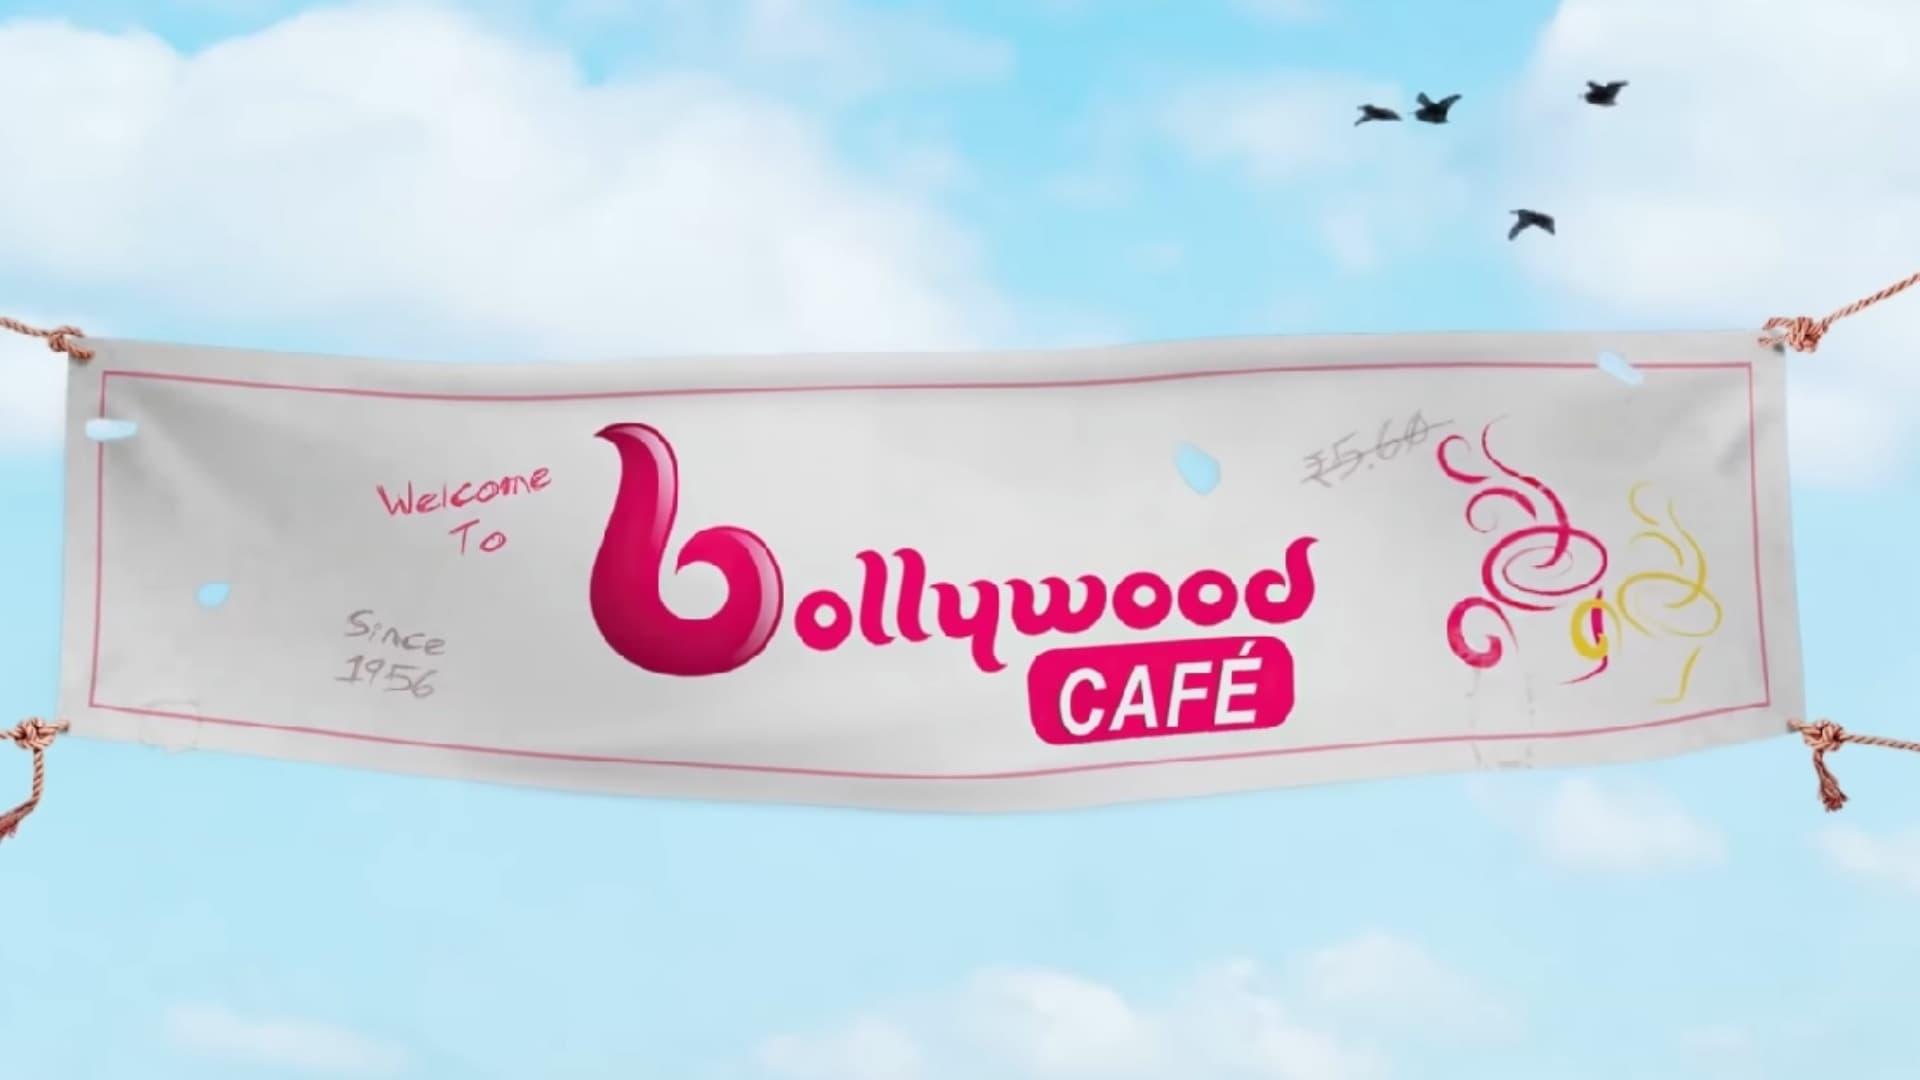 Bollywood cafe backdrop